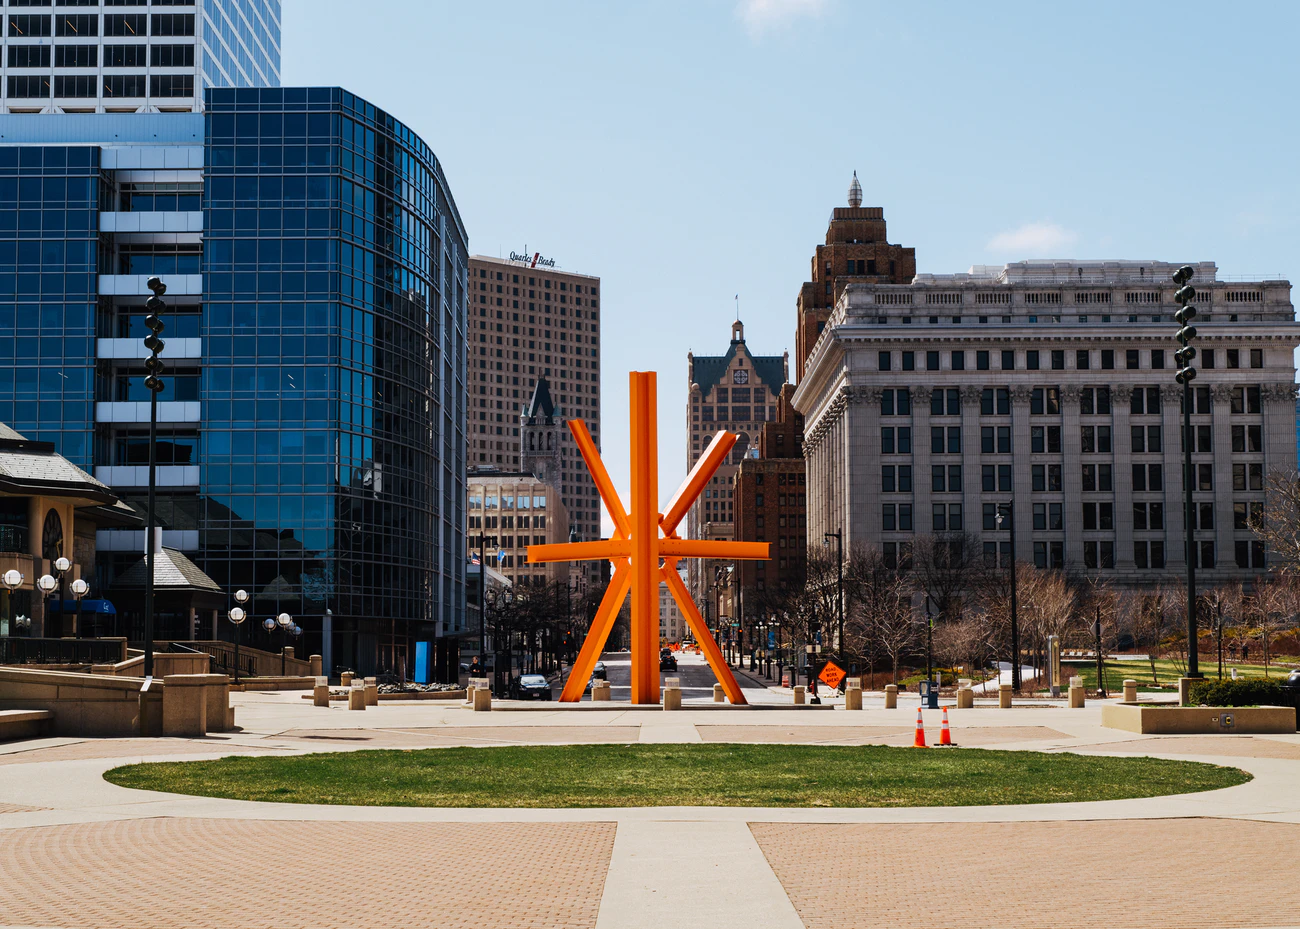 Cityscape with sidewalk and orange art installation.